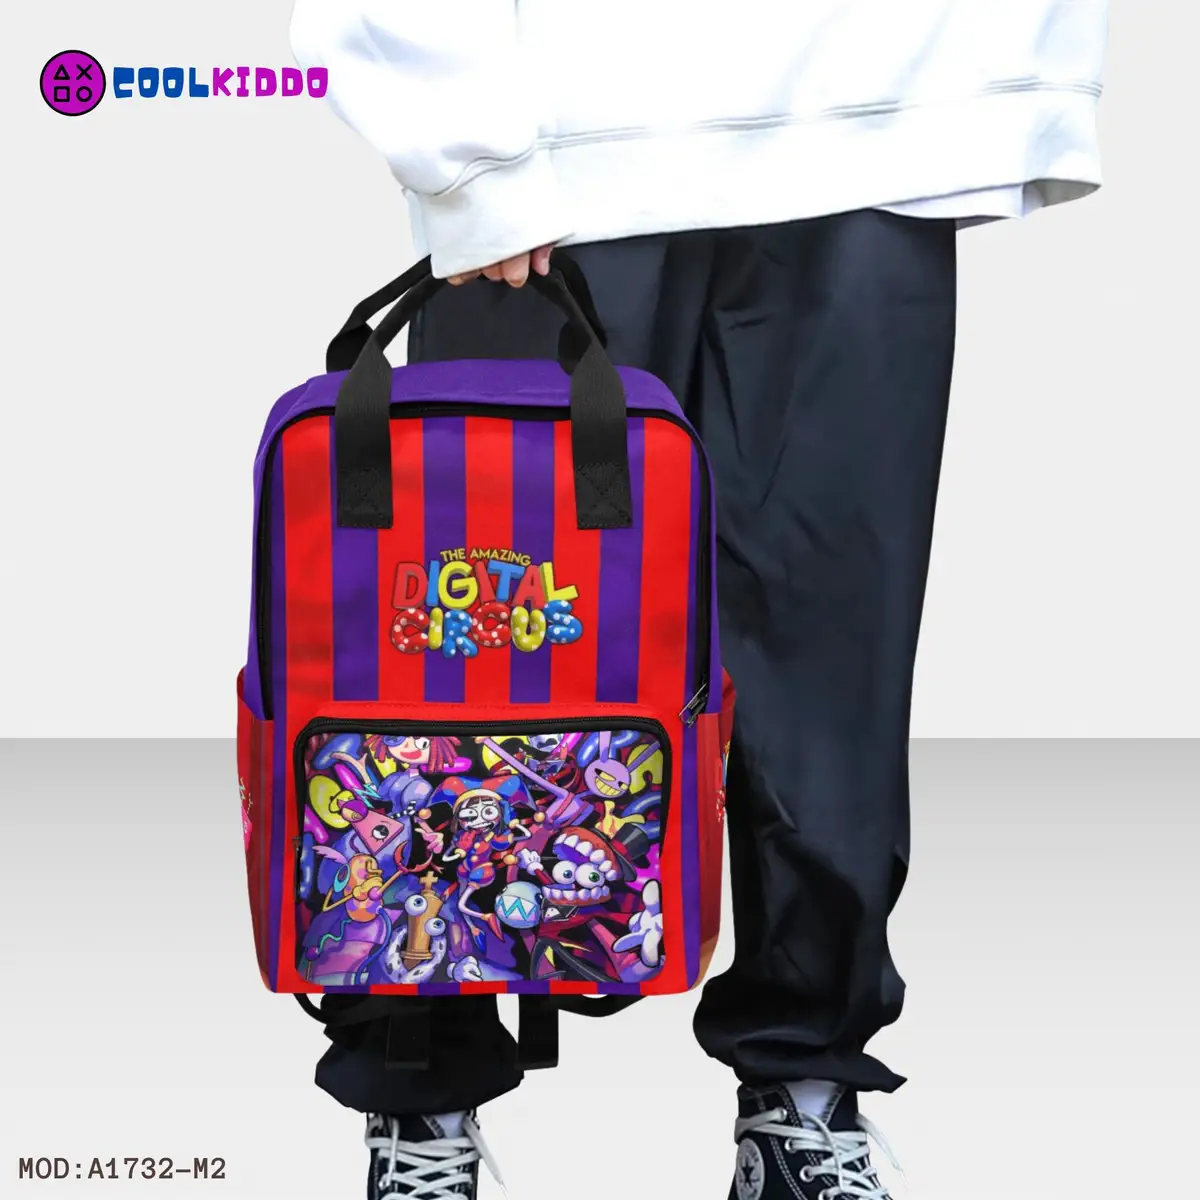 Amazing Digital Circus Handle Backpack. Book bag for Kids / Youth Cool Kiddo 12